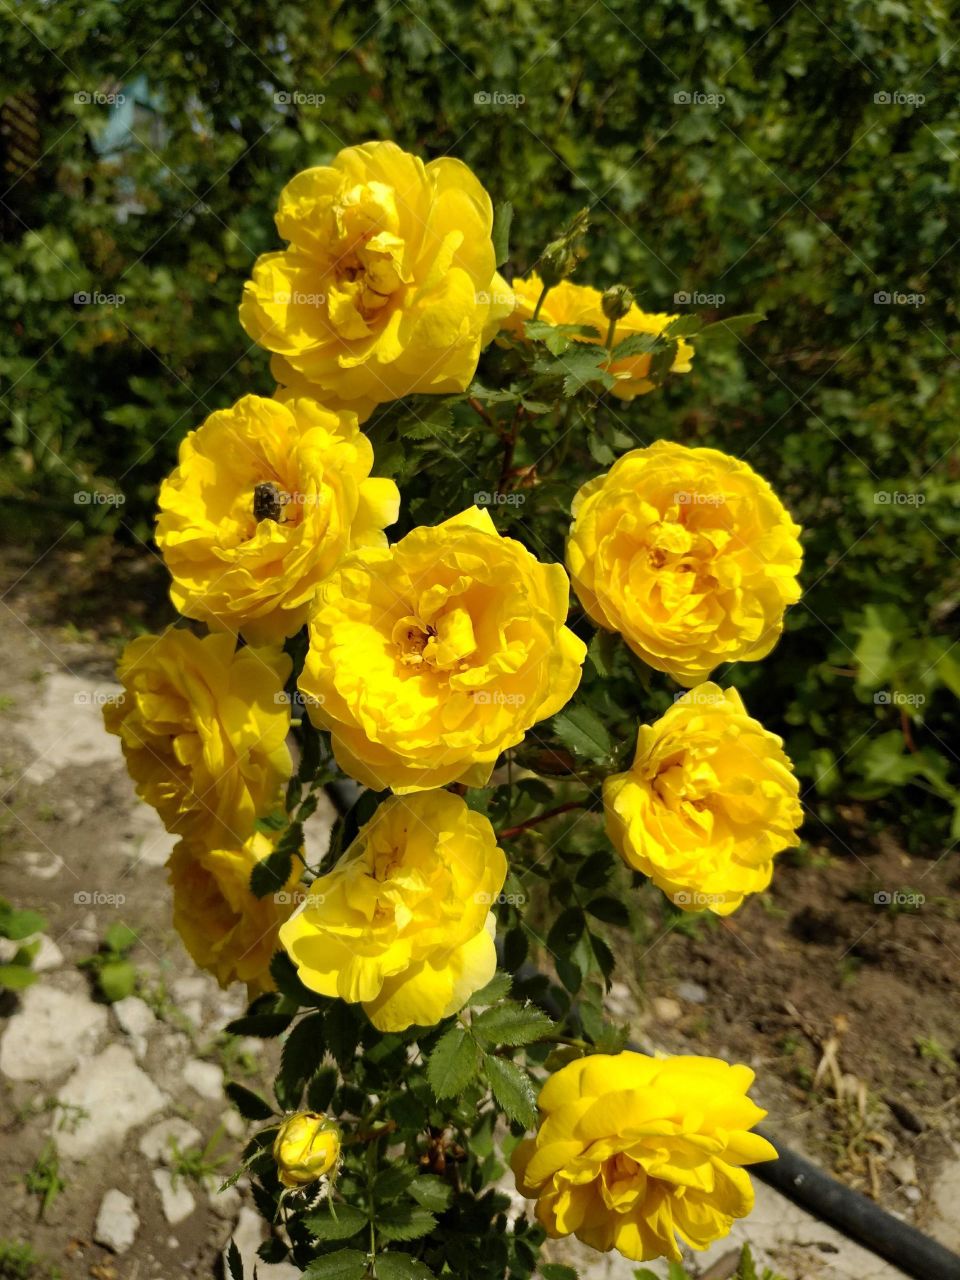 rose, yellow, yellow rose, rose in a garden